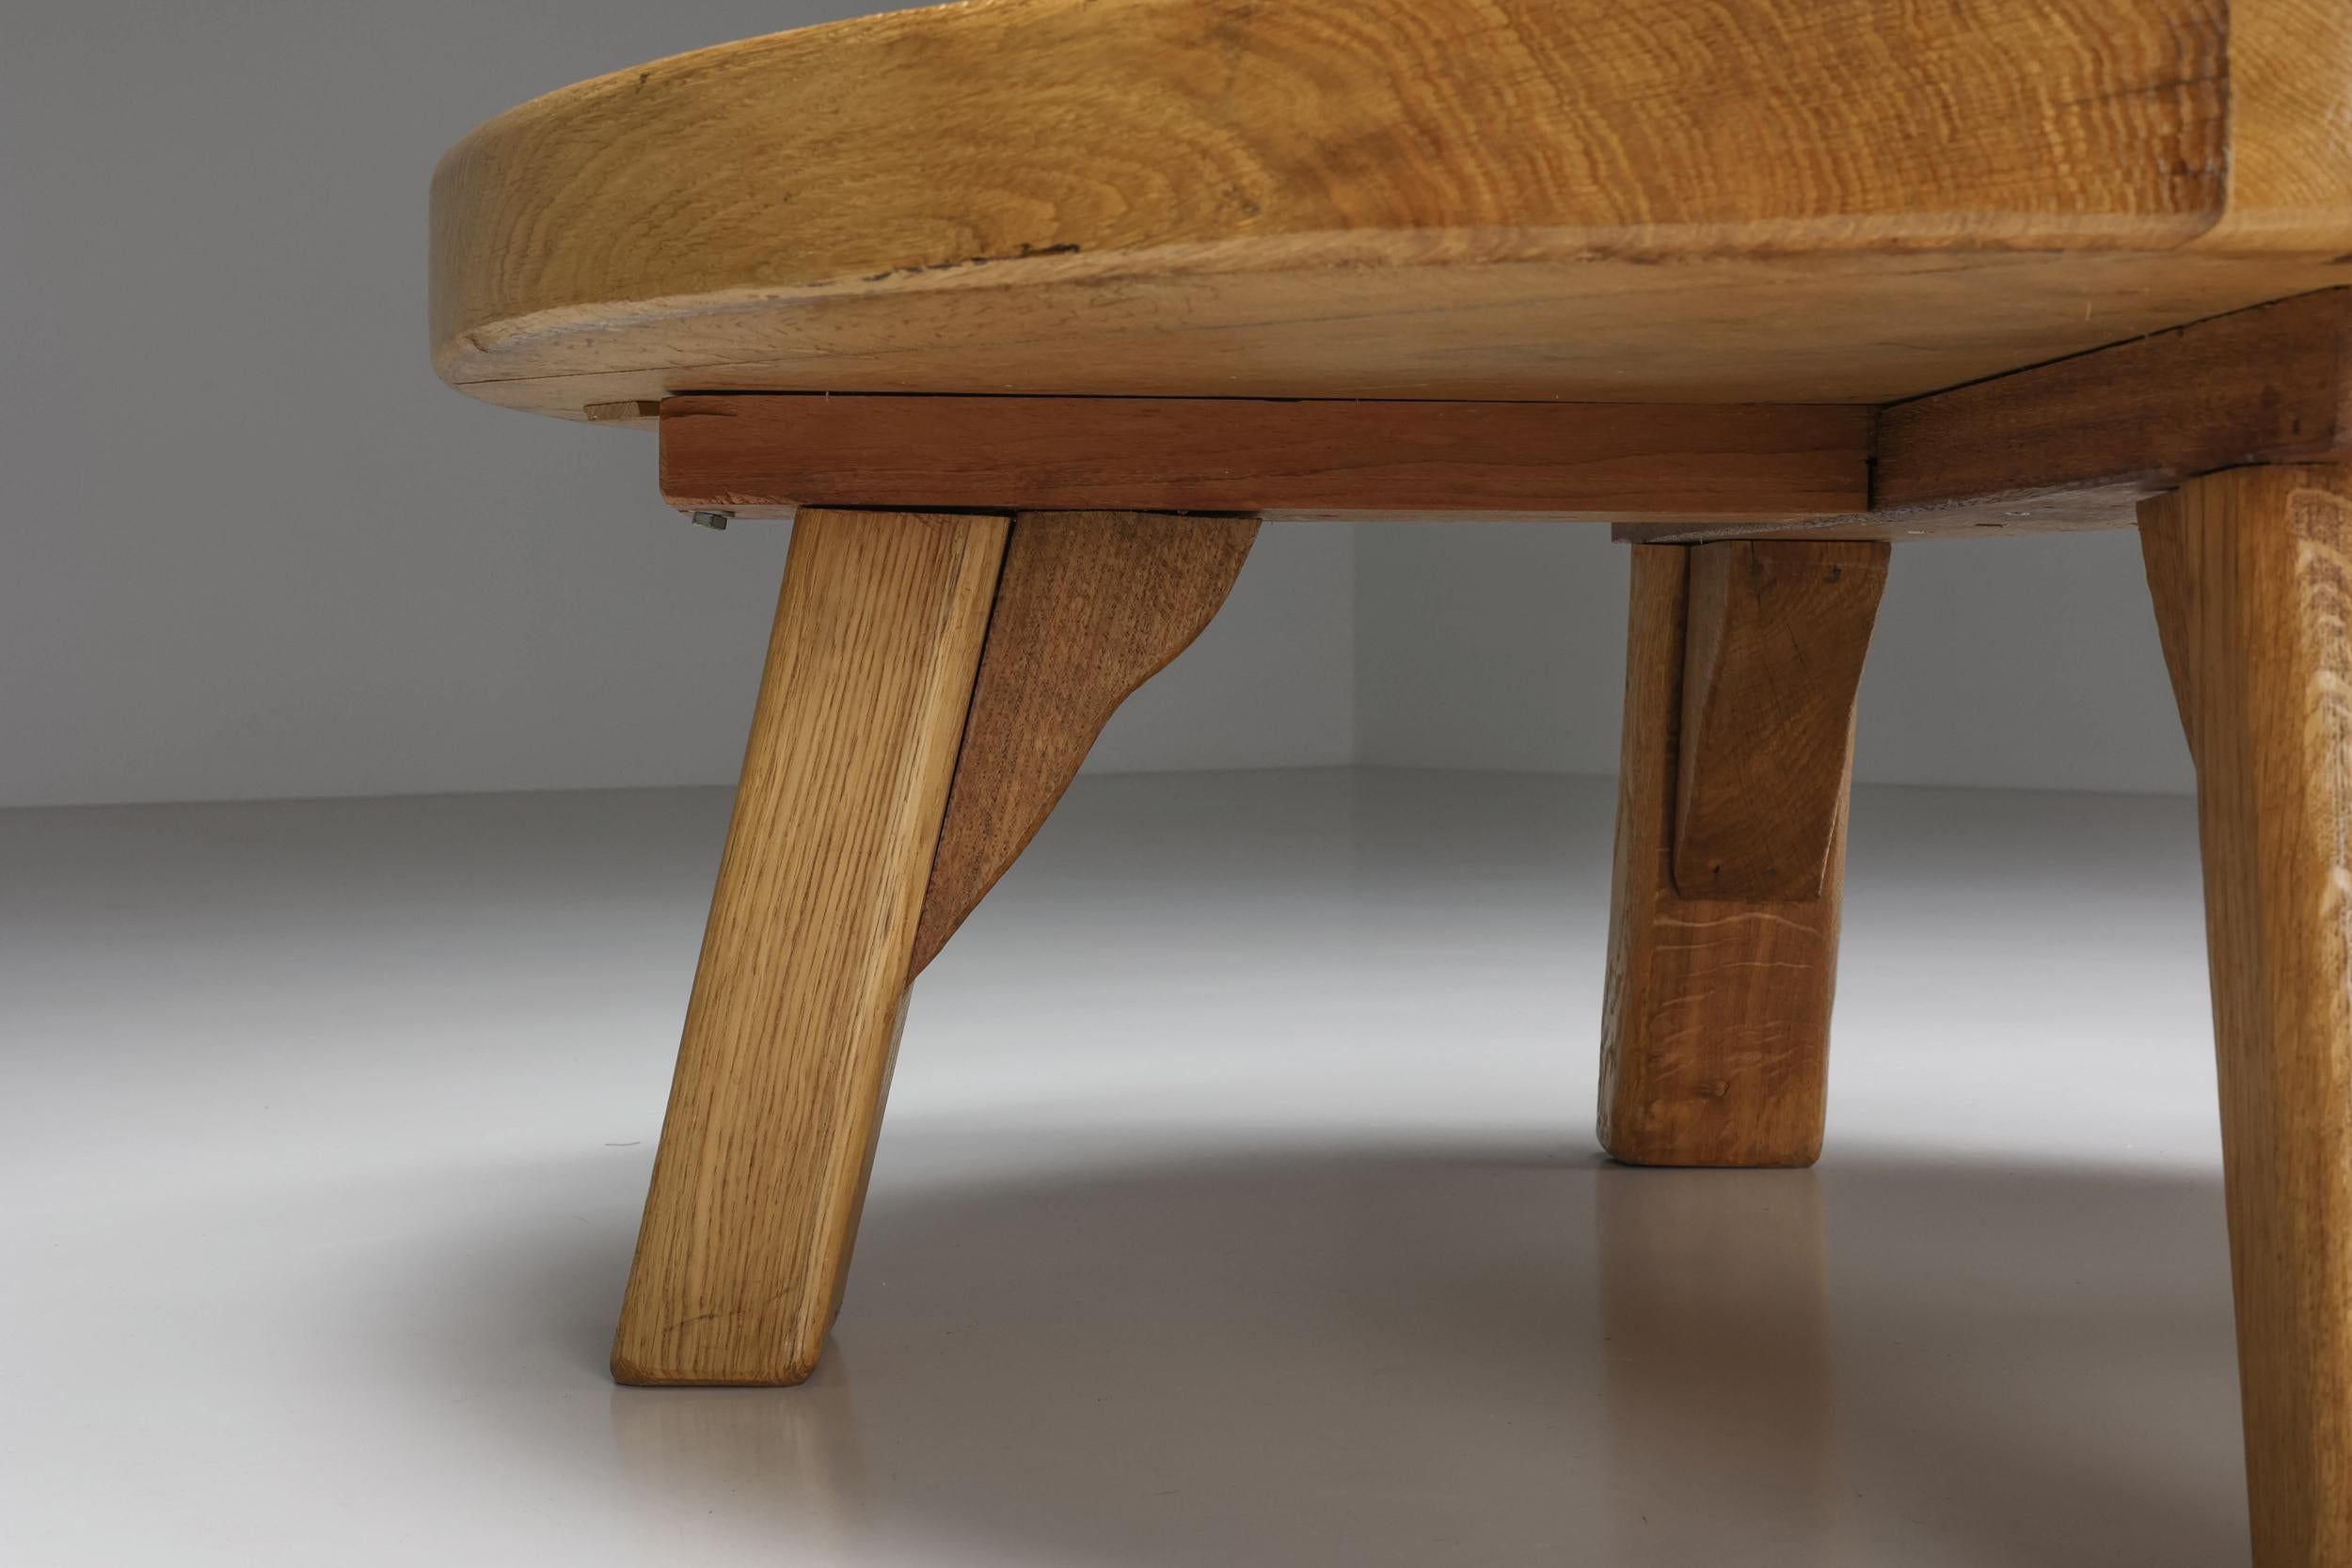 Rustic Wooden Round Coffee Table, Mid-Century Modern, Wabi-Sabi, 1950's 1